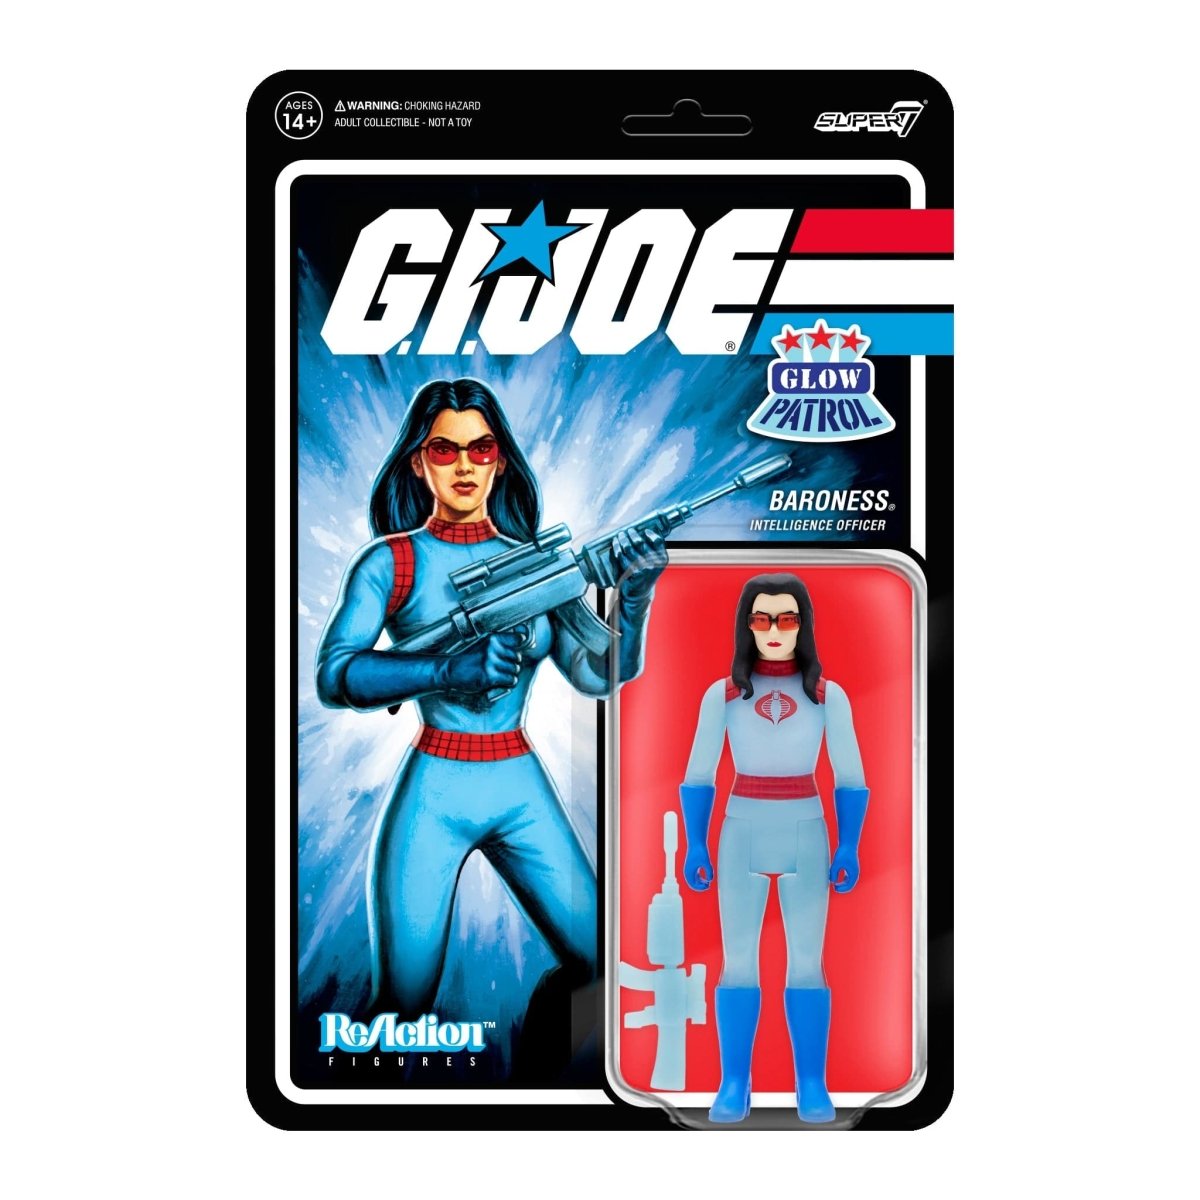 G.I. Joe ReAction Figures Baroness (Glow Patrol) Wave 1b Exclusive - Pop-O-Loco - Super7